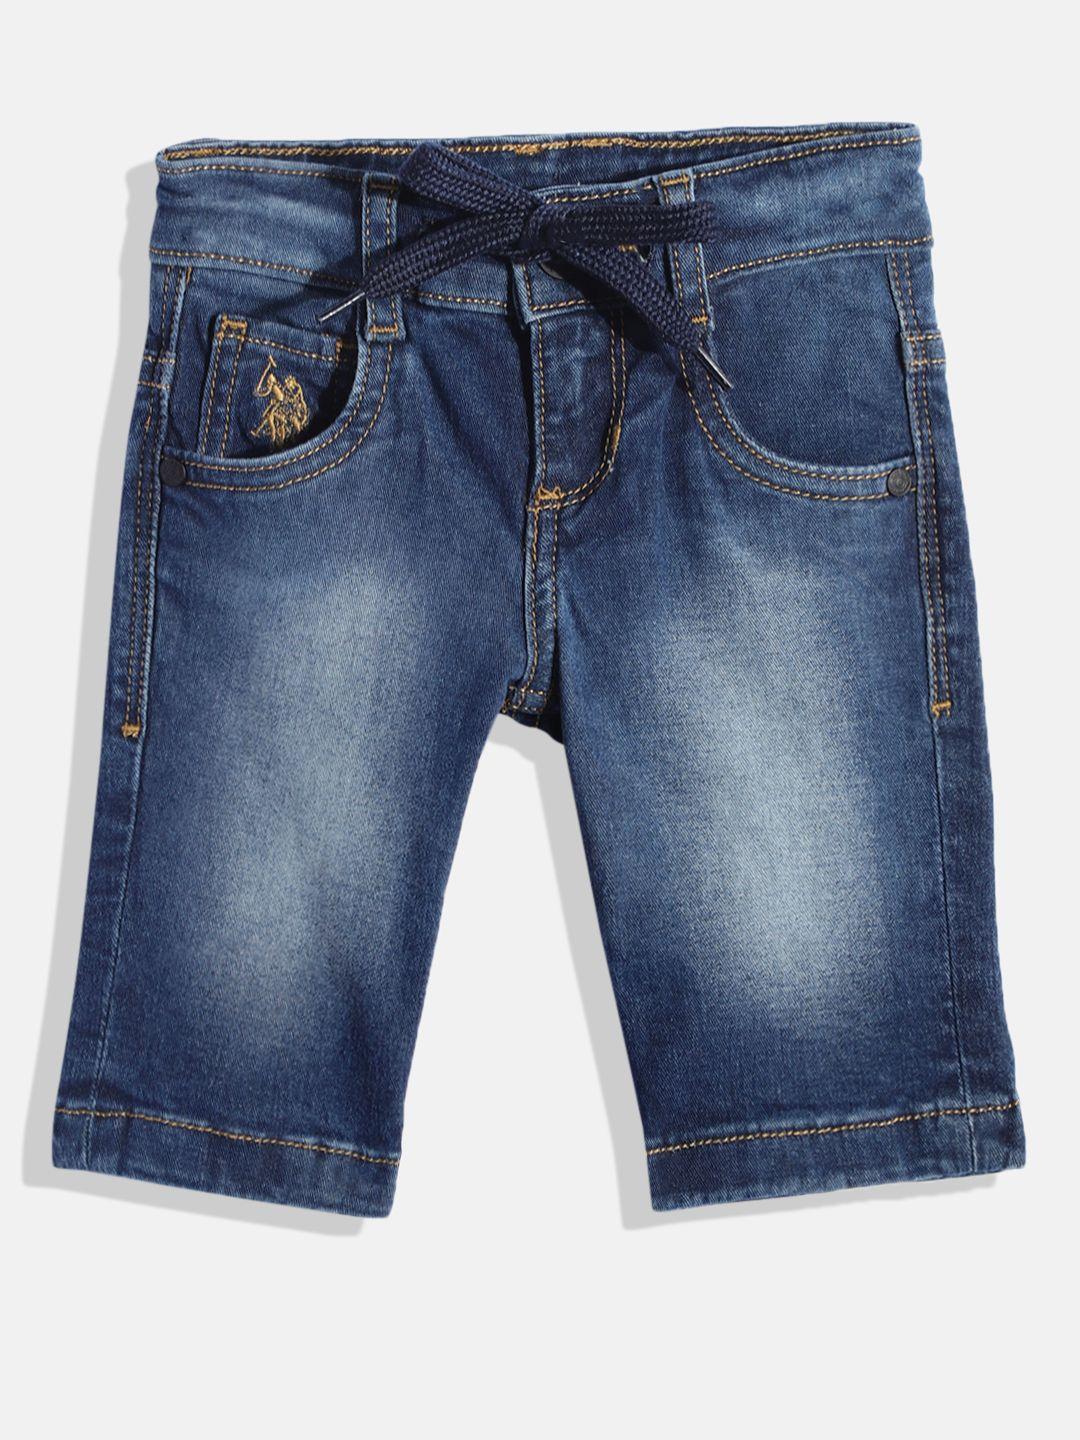 u.s.polo assn. kids boys blue washed denim shorts